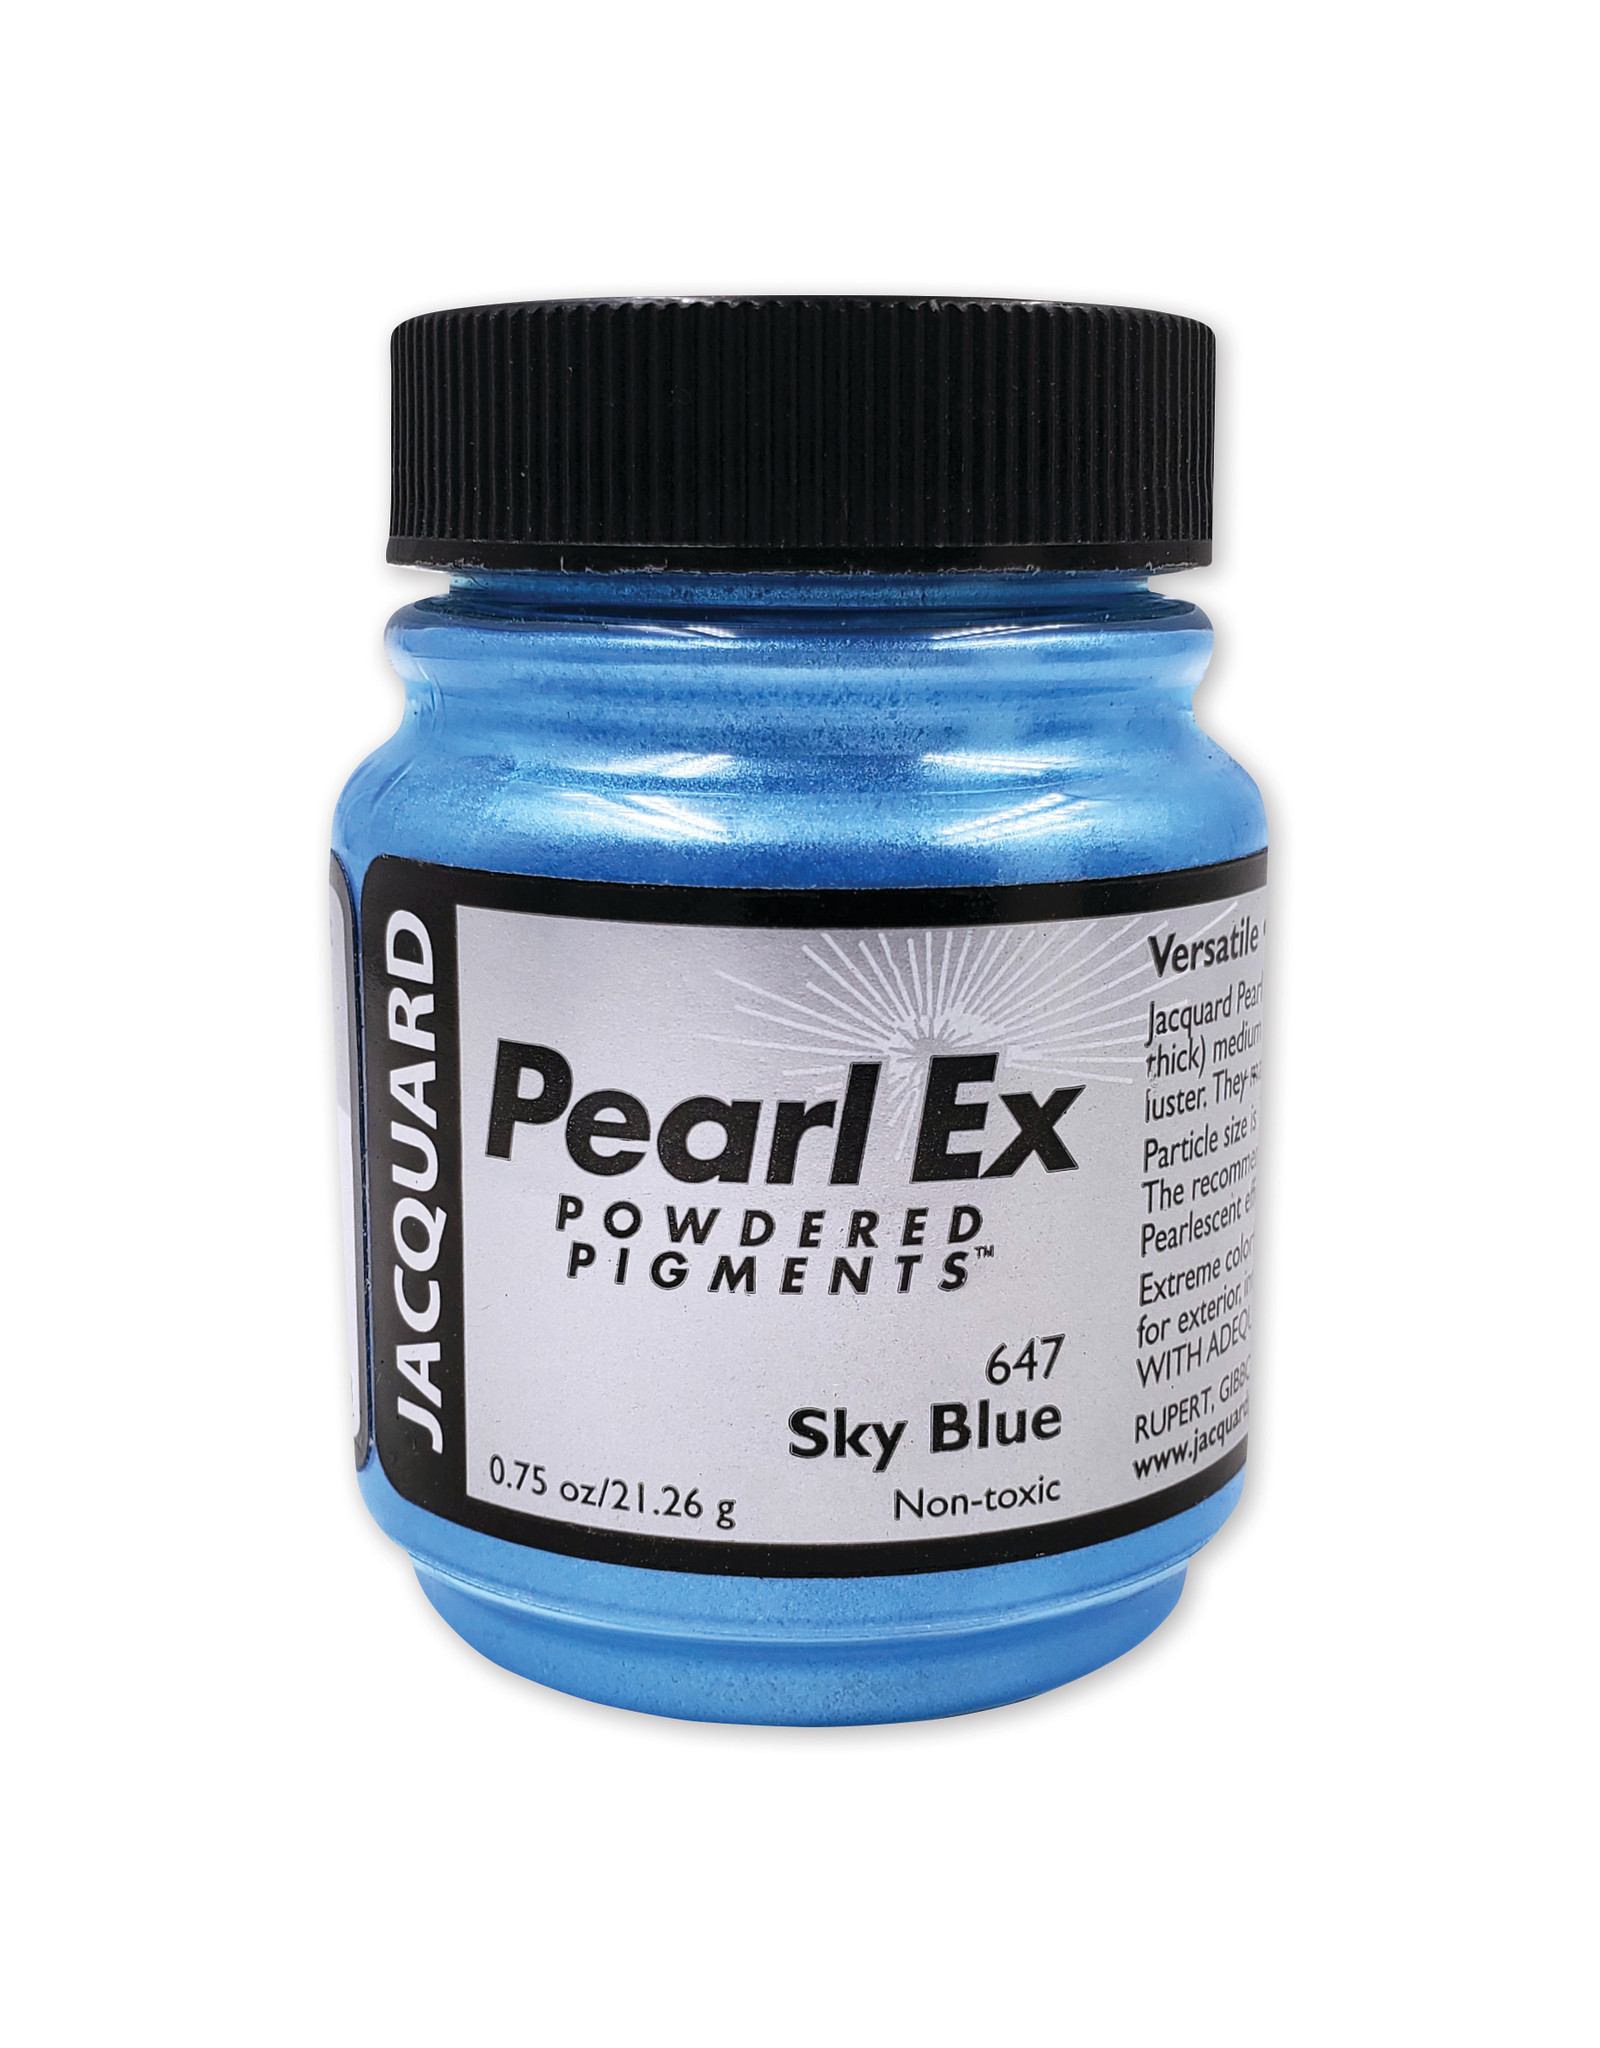 Jacquard Jacquard Pearl Ex, Sky Blue #647 3/4oz